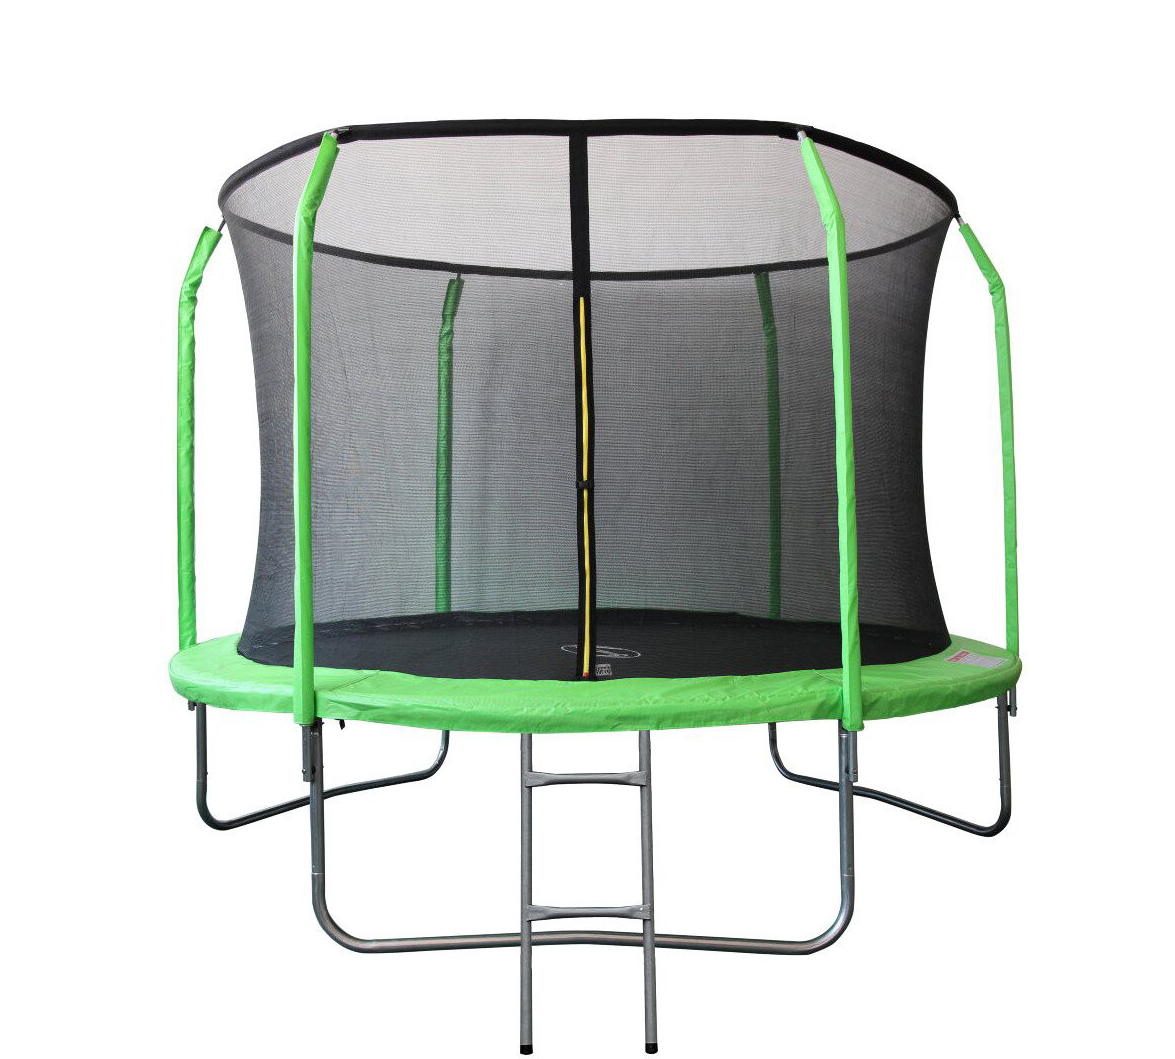 Батут 8FT 2,44м SportElite фиберглас, салатовый, GB30201-8 FT батут с защитной сеткой trampoline 6 диаметр 1 8 м